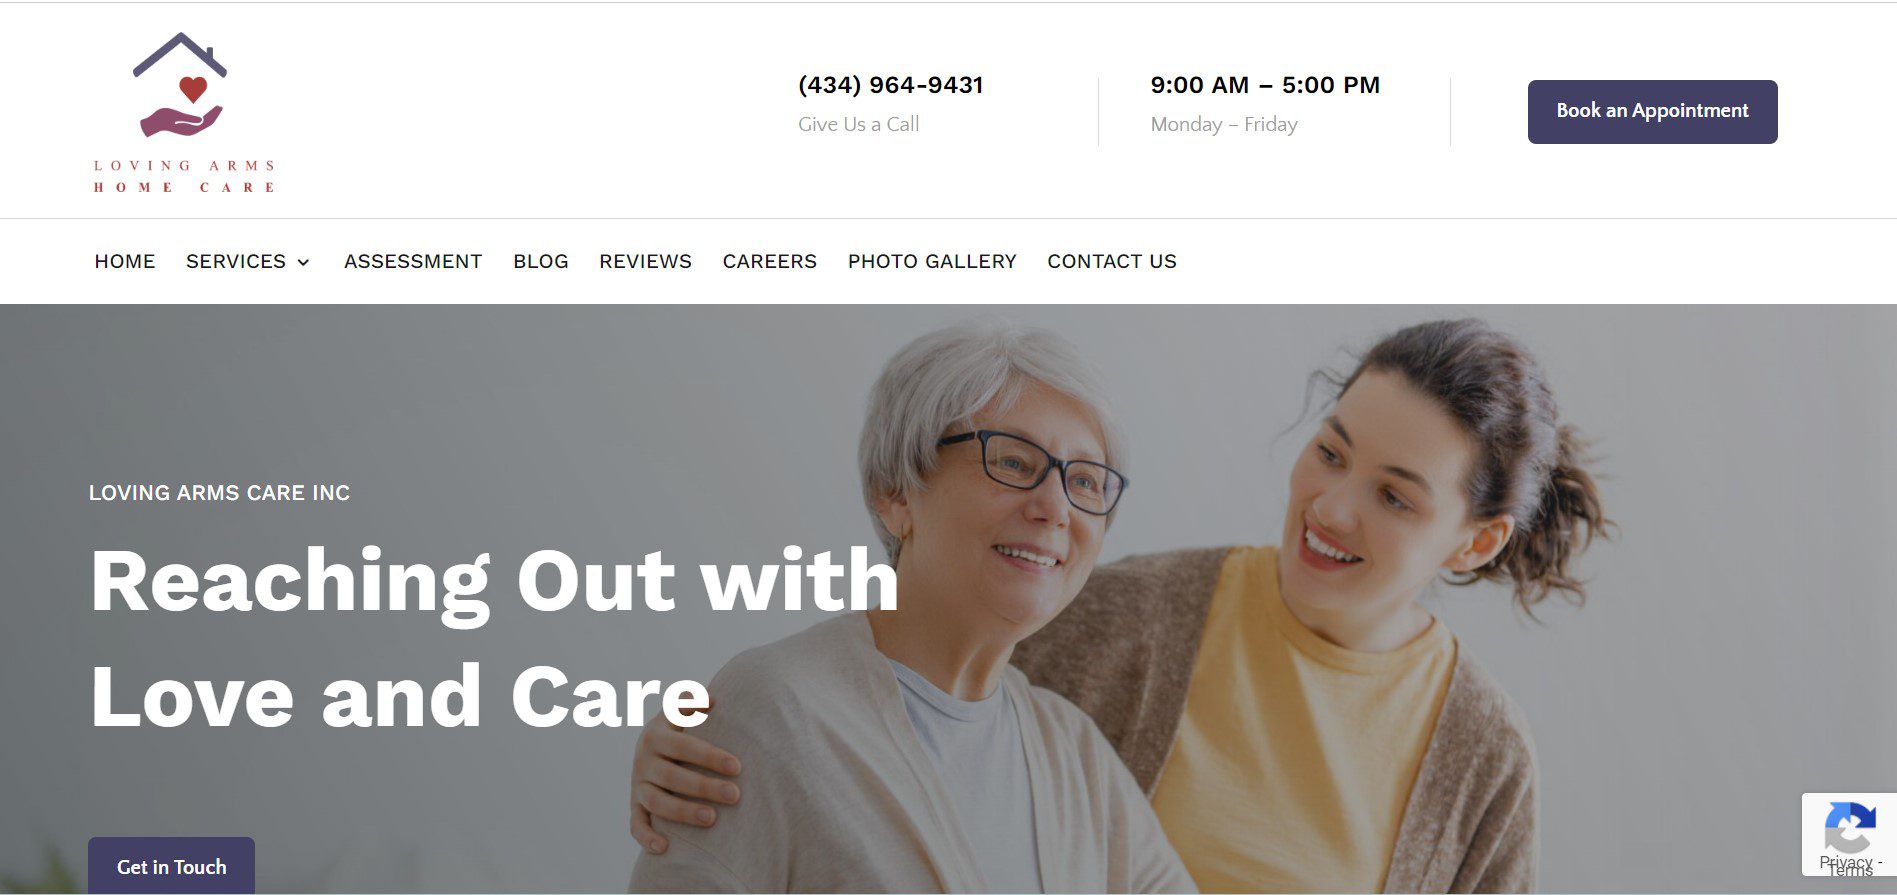 Loving arms care website